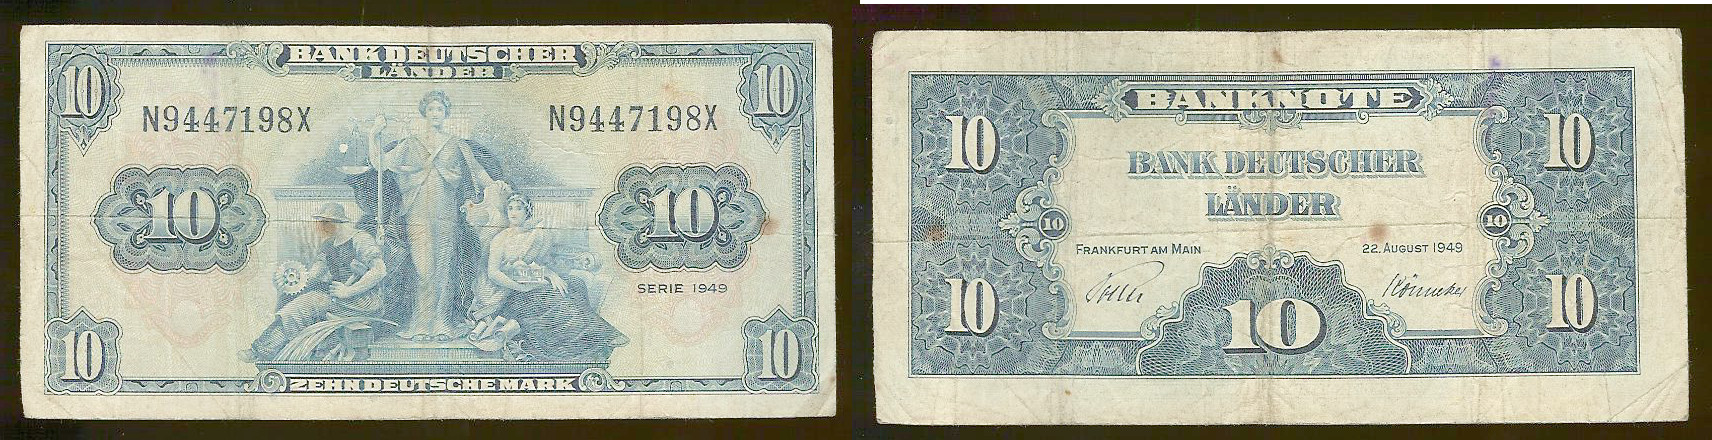 10 Deutsche Mark ALLEMAGNE FÉDÉRALE 1949 P.16a TB+